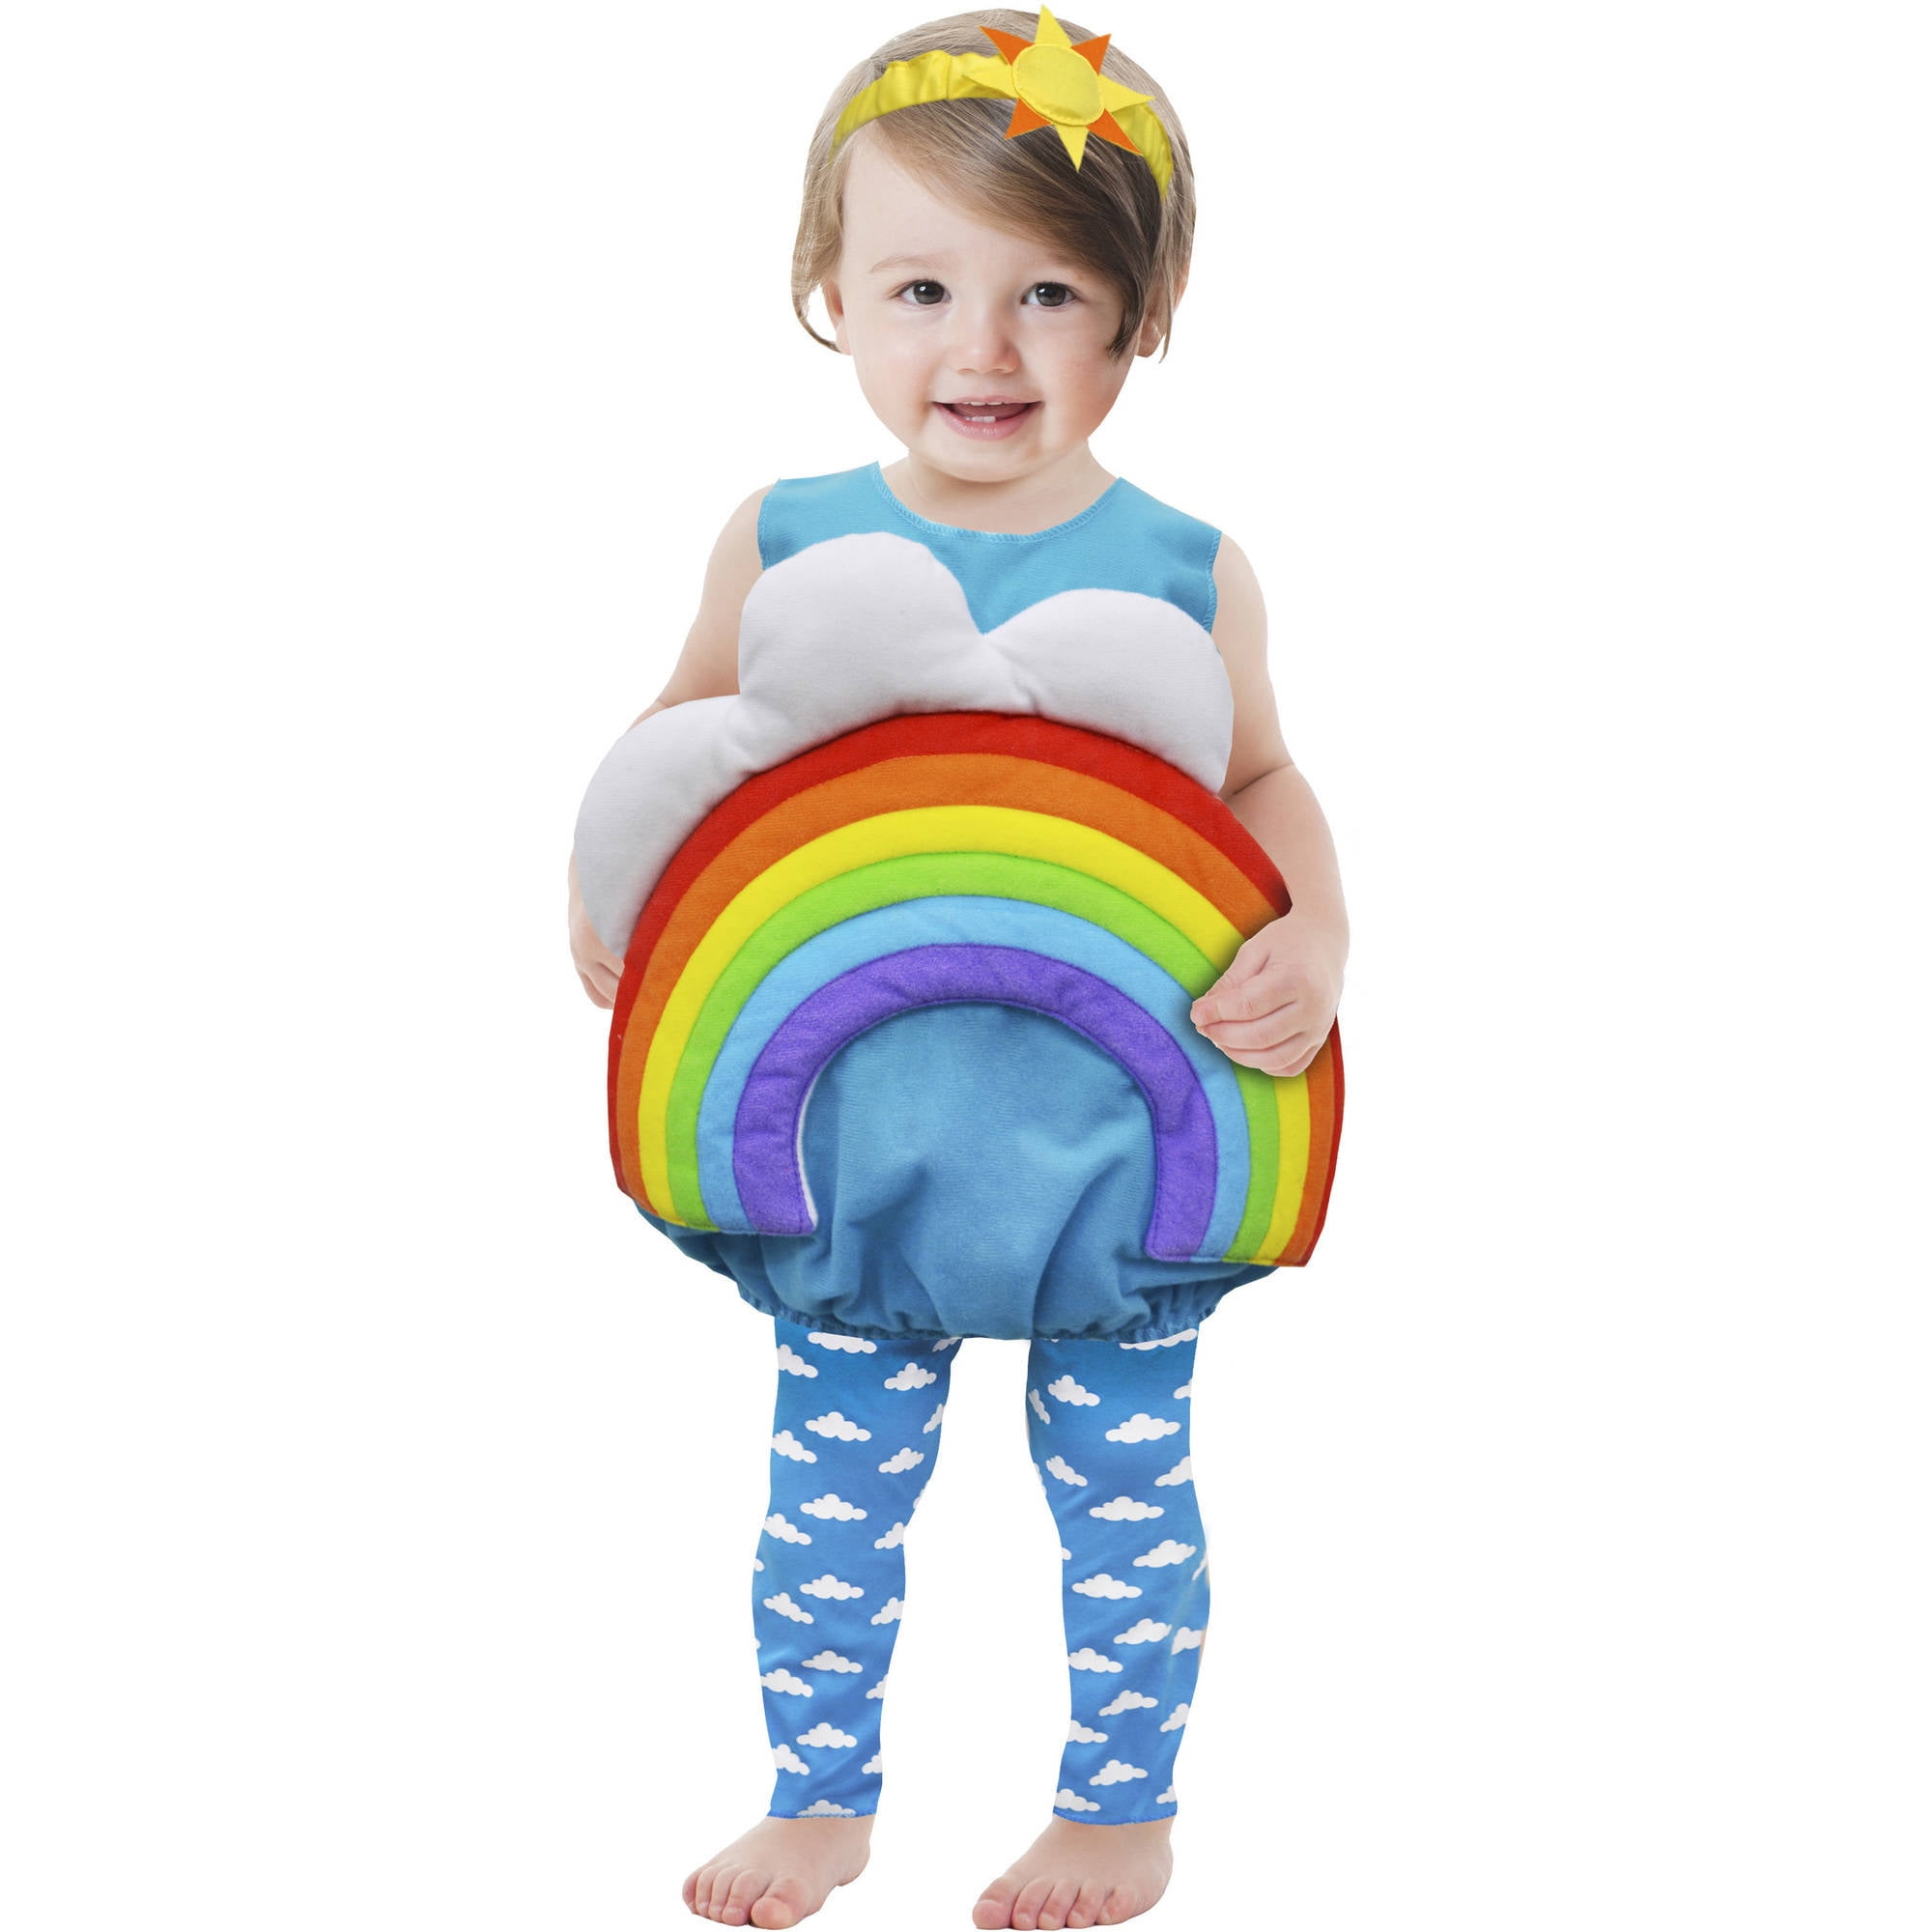 Little Rainbow Infant Halloween Costume 